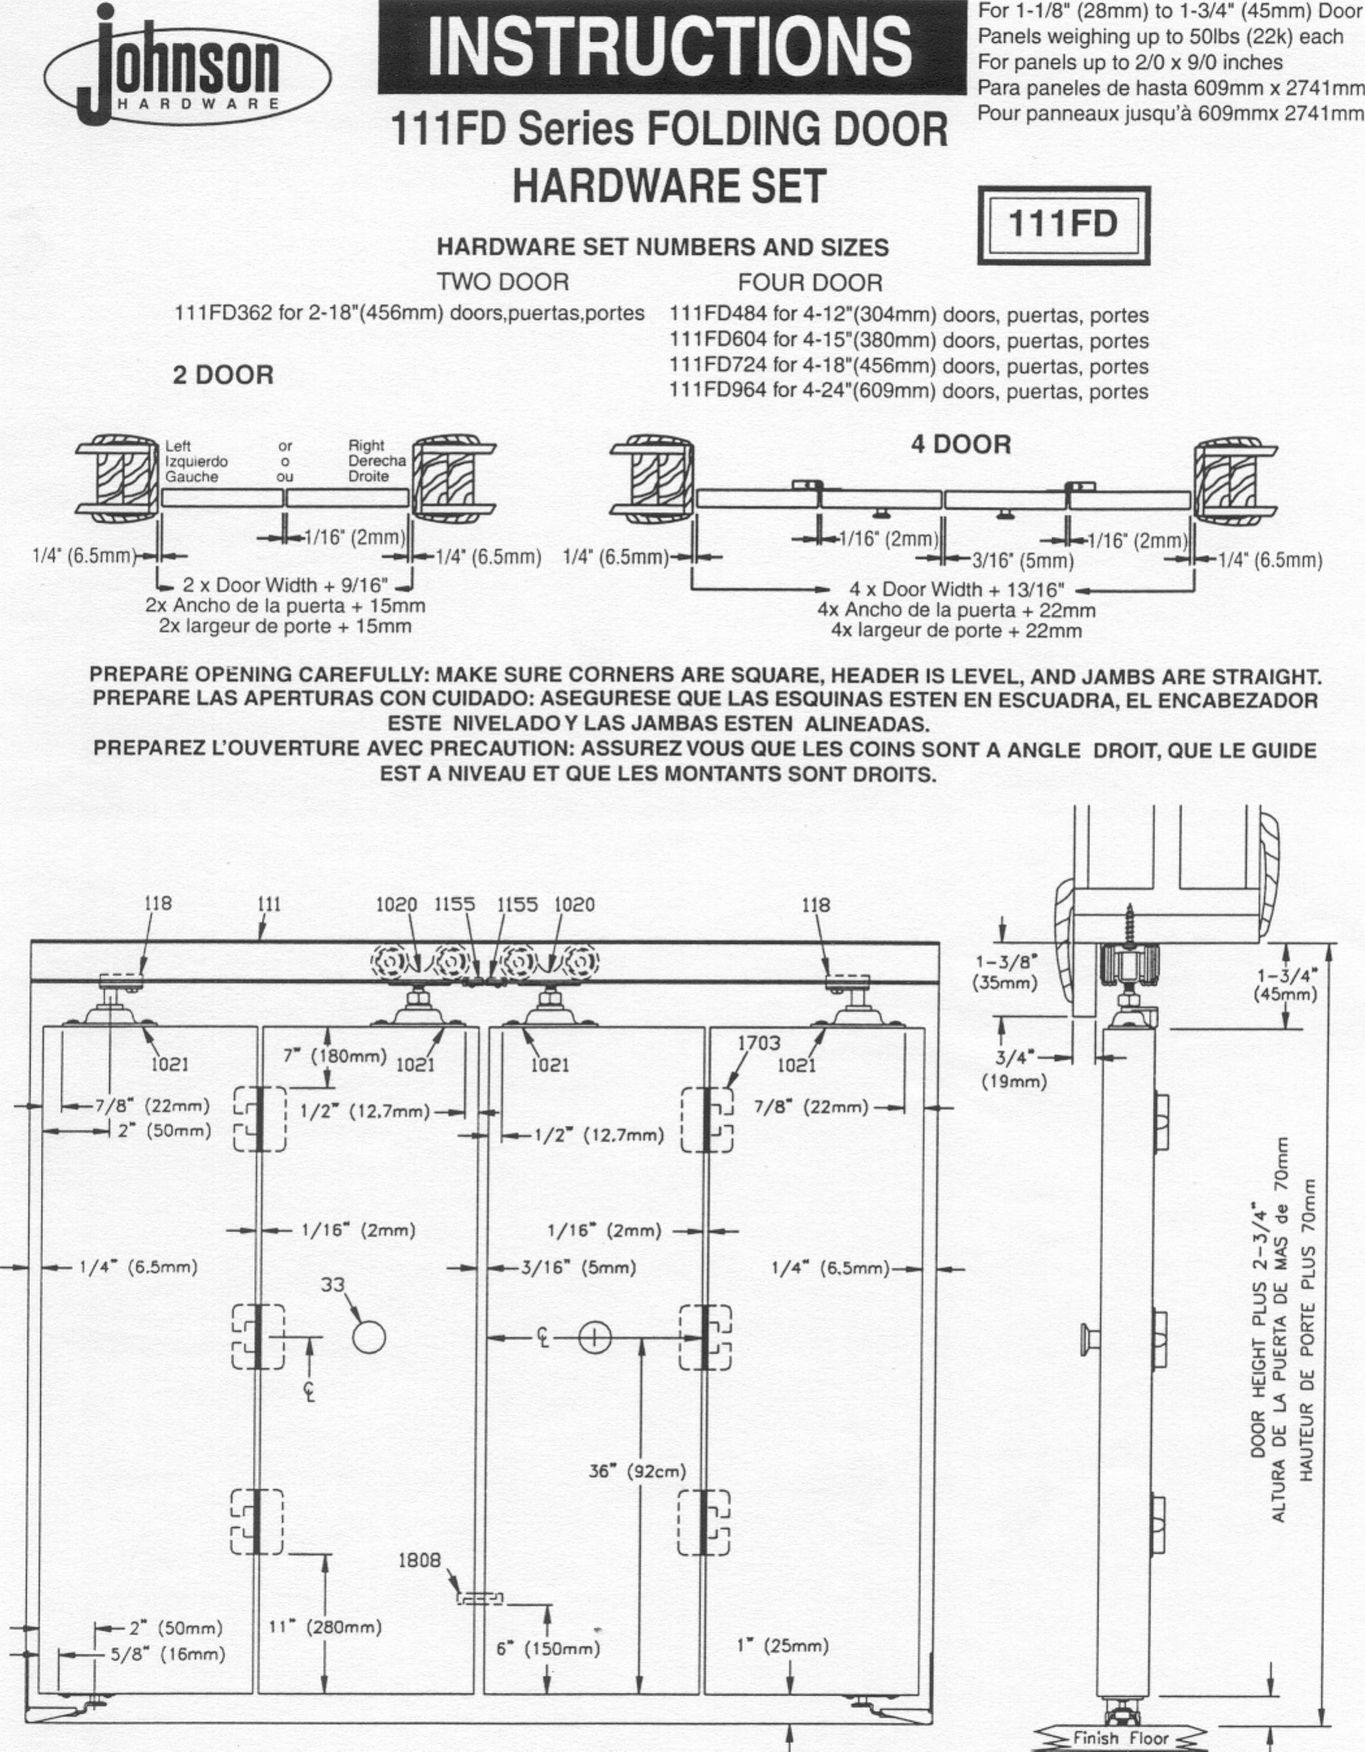 Johnson Hardware 111FD604 Door User Manual